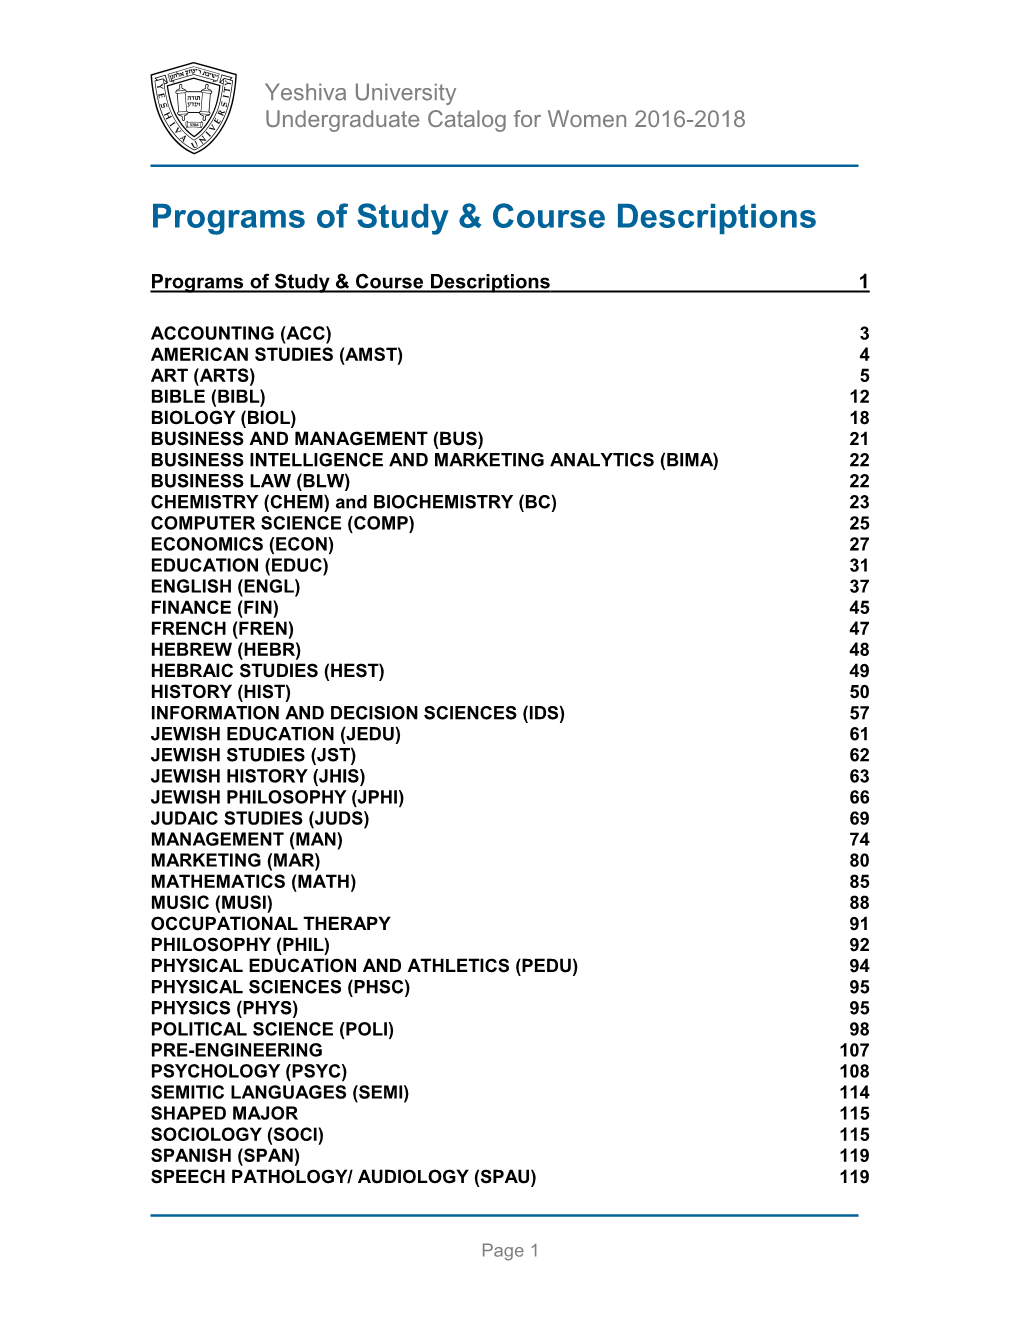 Programs of Study/Course Descriptions